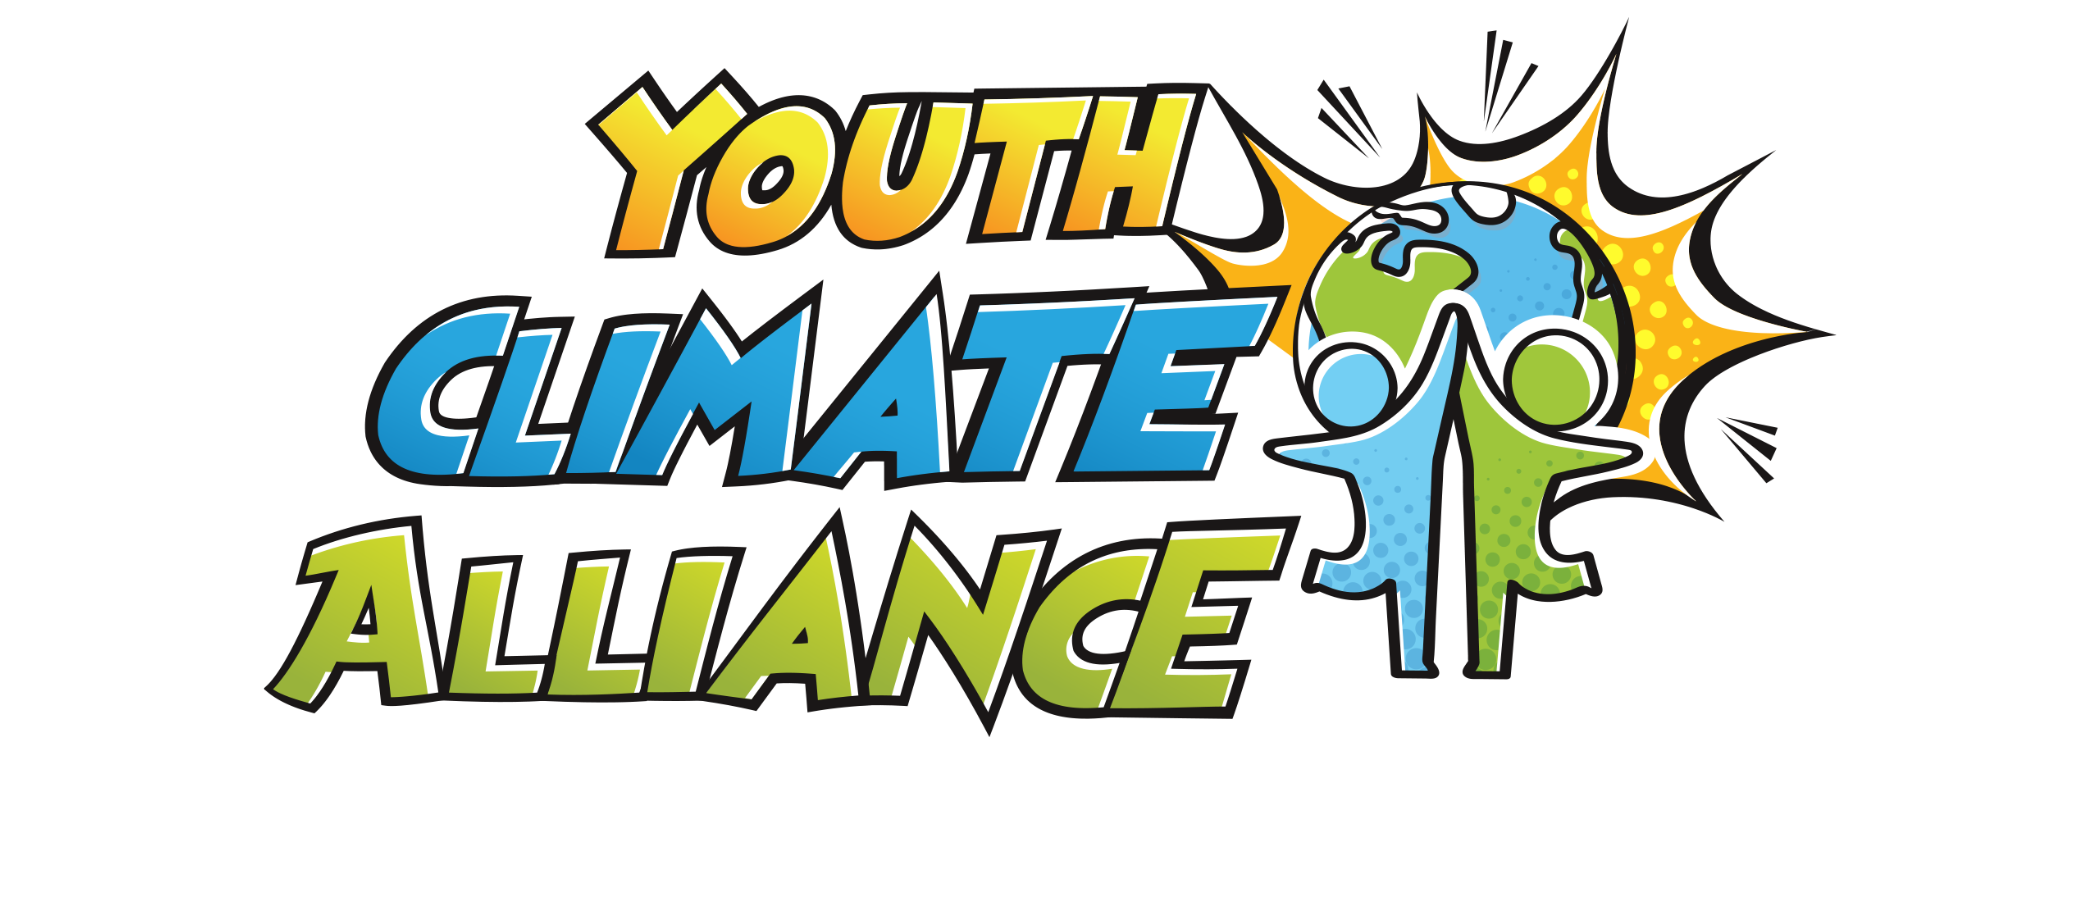 Youth Climate Alliance logo.